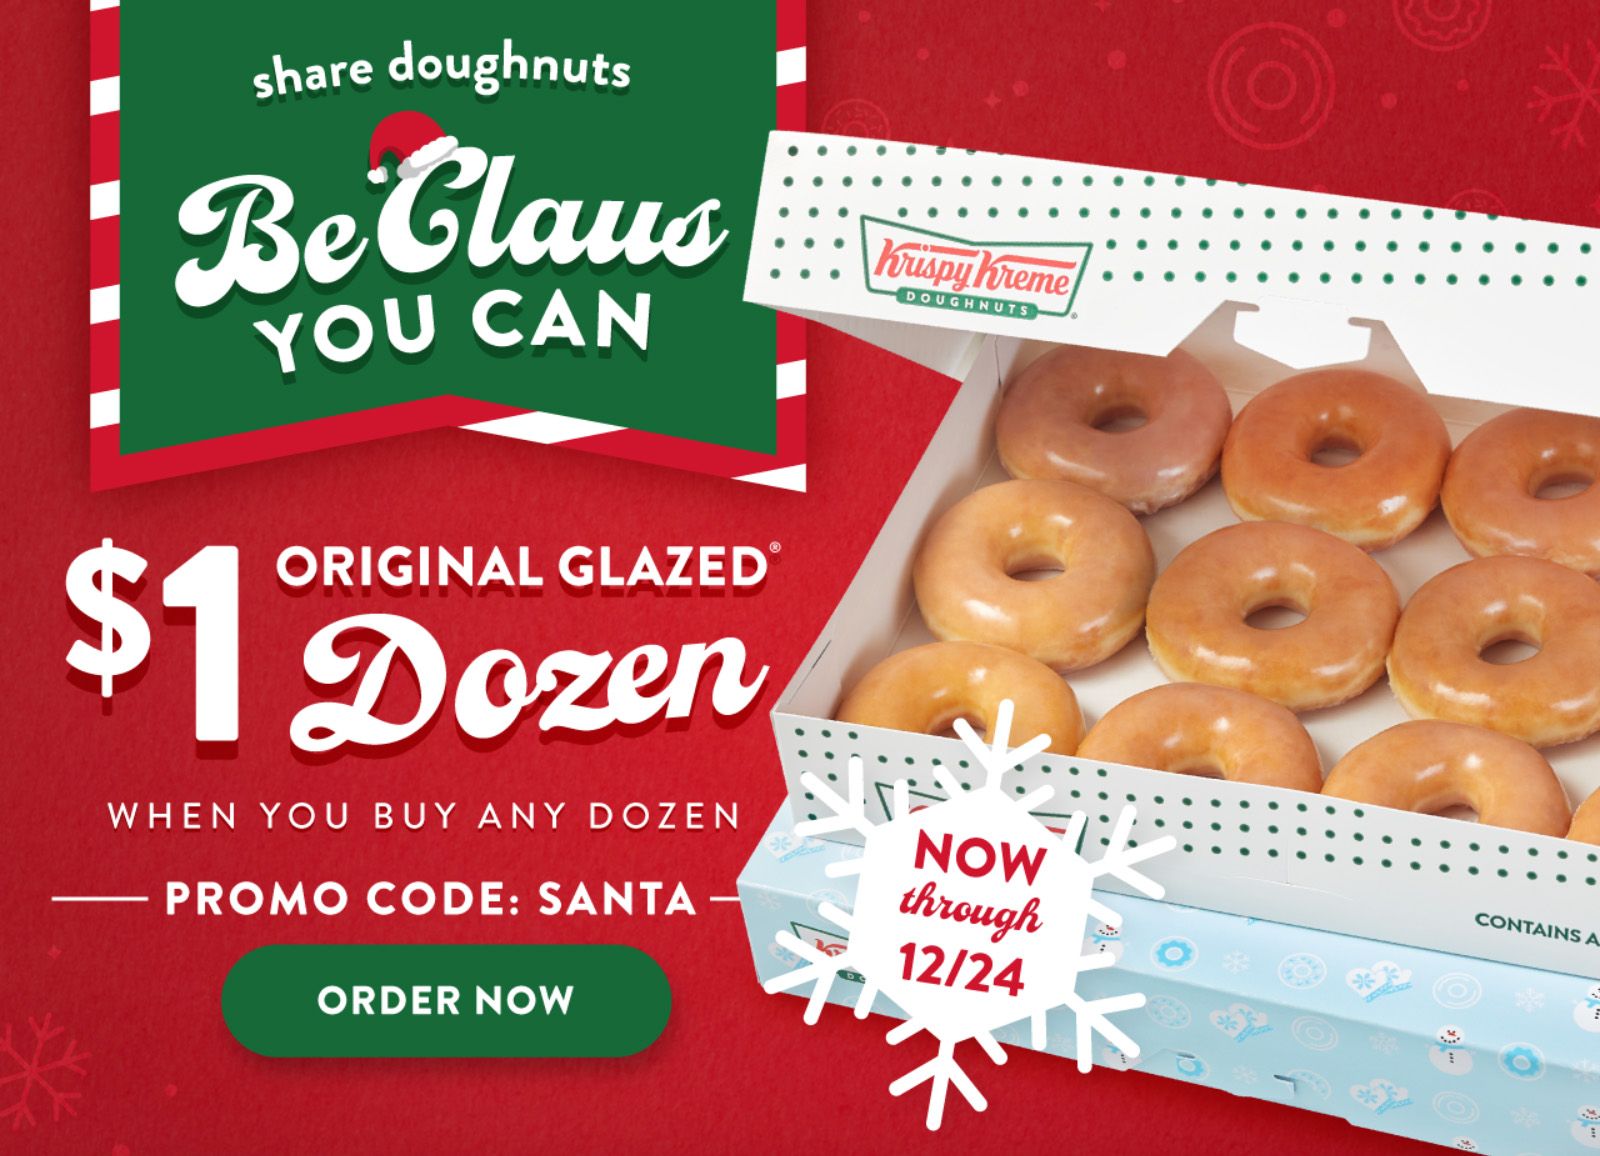 Buy Any Dozen and Receive a $1 Original Glazed Dozen Online at Krispy Kreme Through to December 24